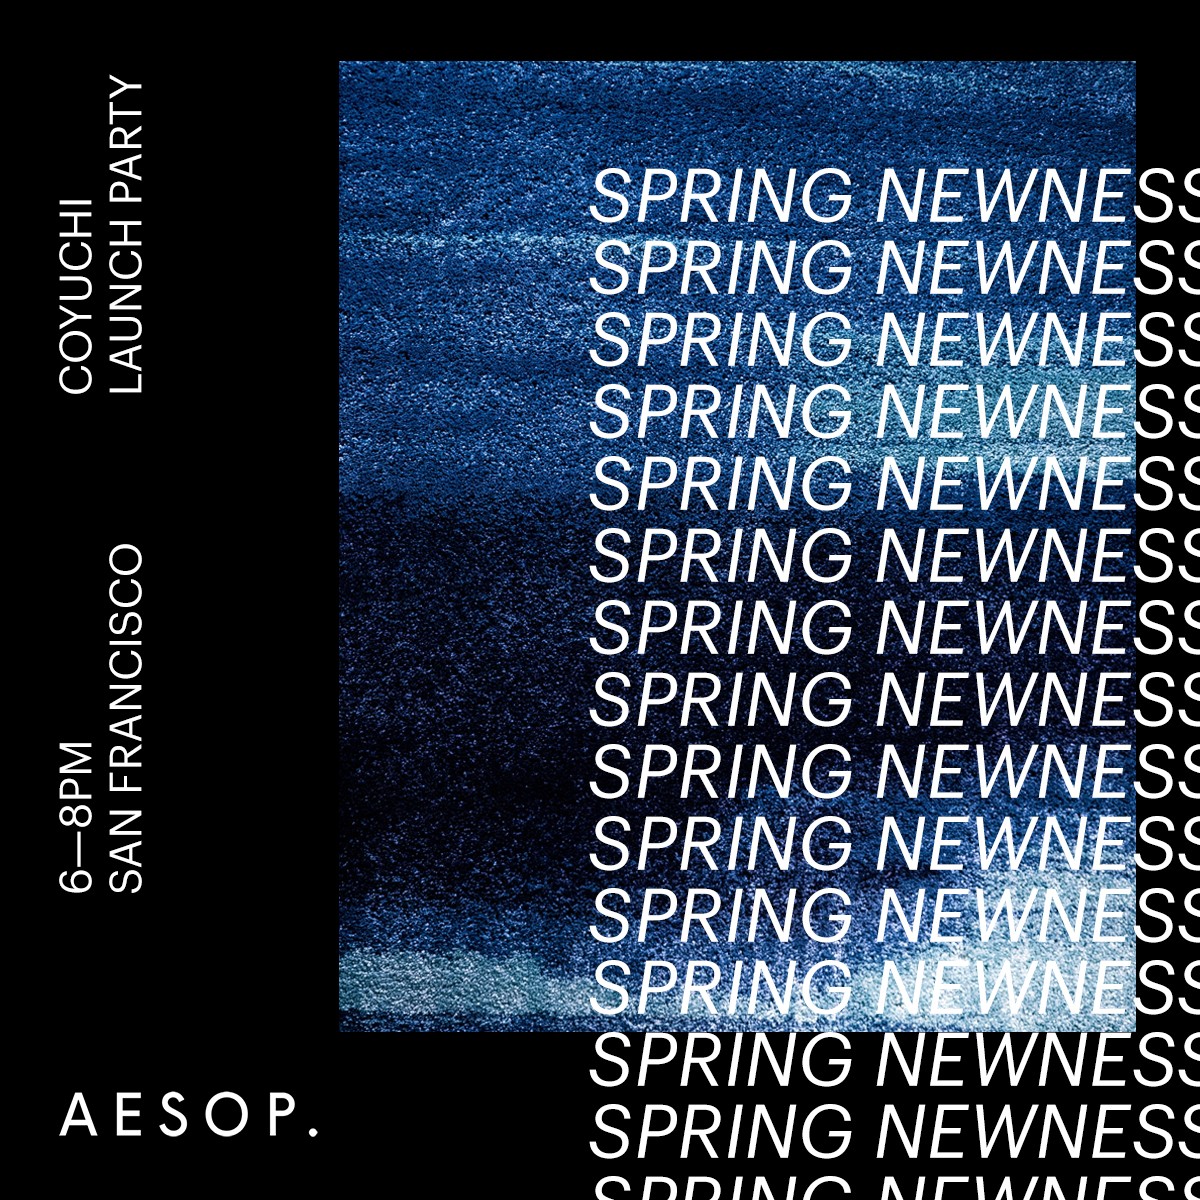 spring-newness.jpg?format=1500w